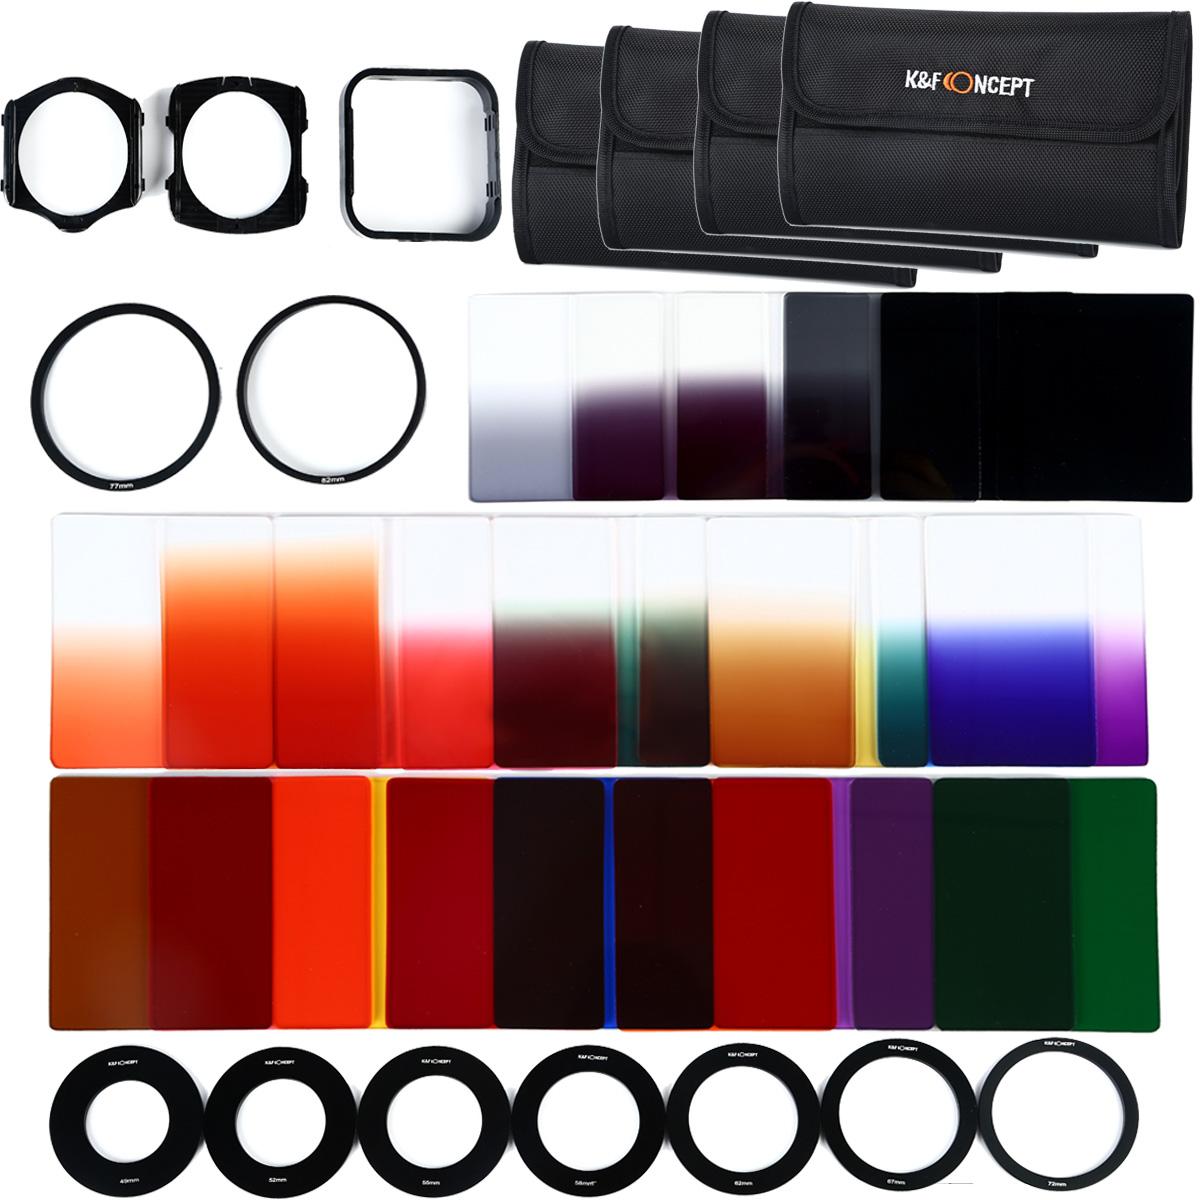 K&F Concept 40 in 1 Square Graduated Color ND Filter Kit (SKU0487)